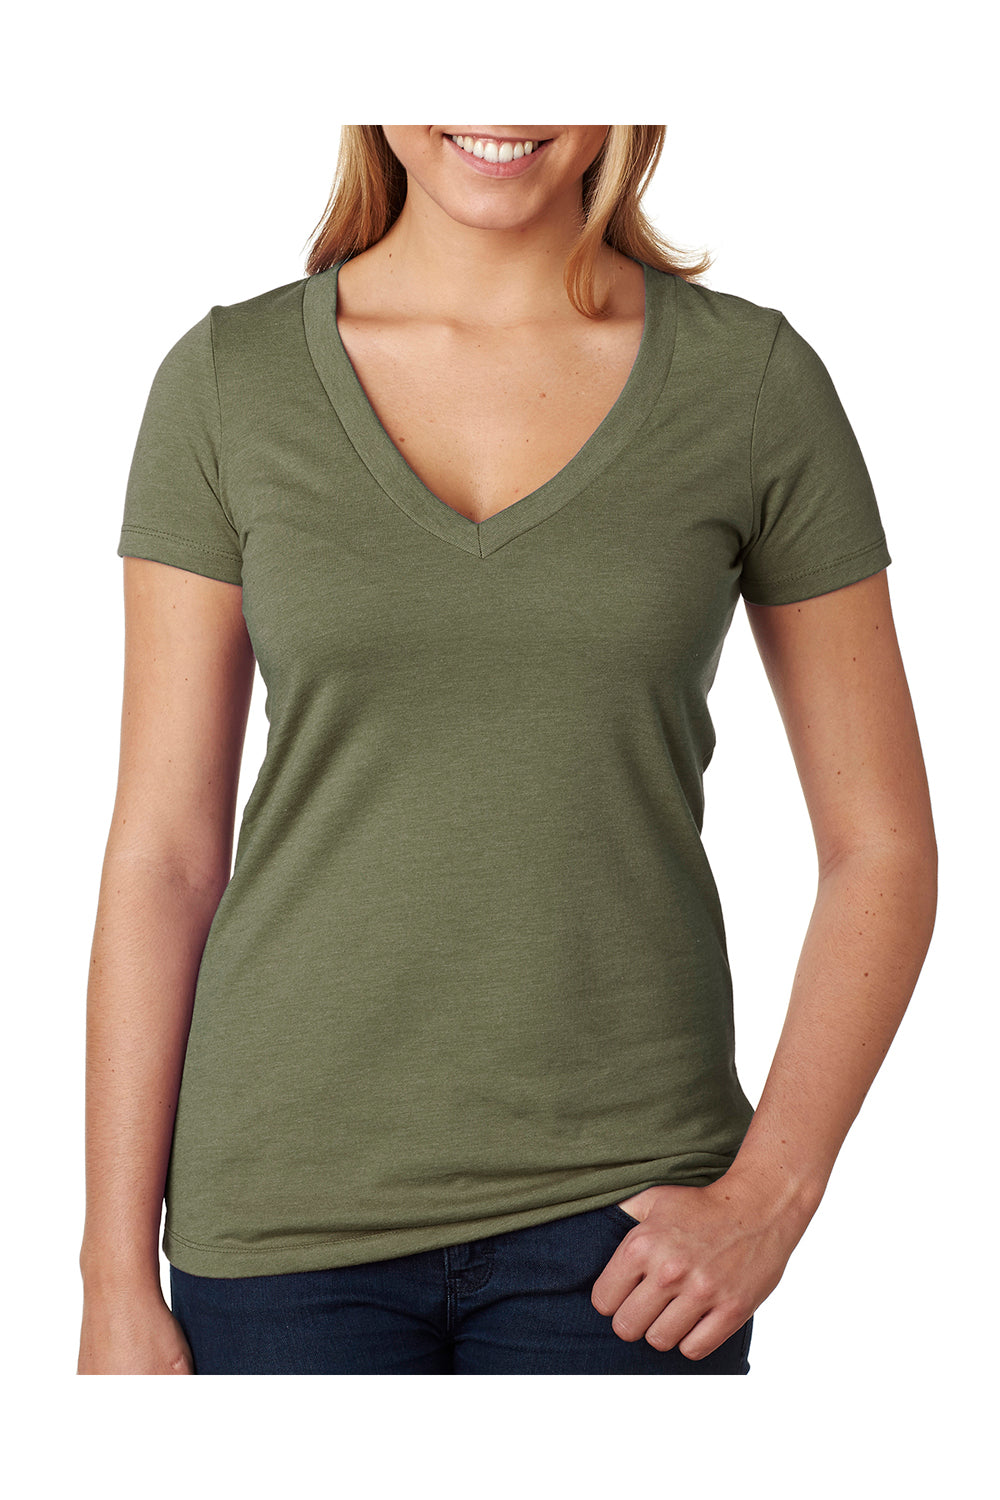 Next Level 6640 Womens CVC Jersey Short Sleeve V-Neck T-Shirt Military Green Front